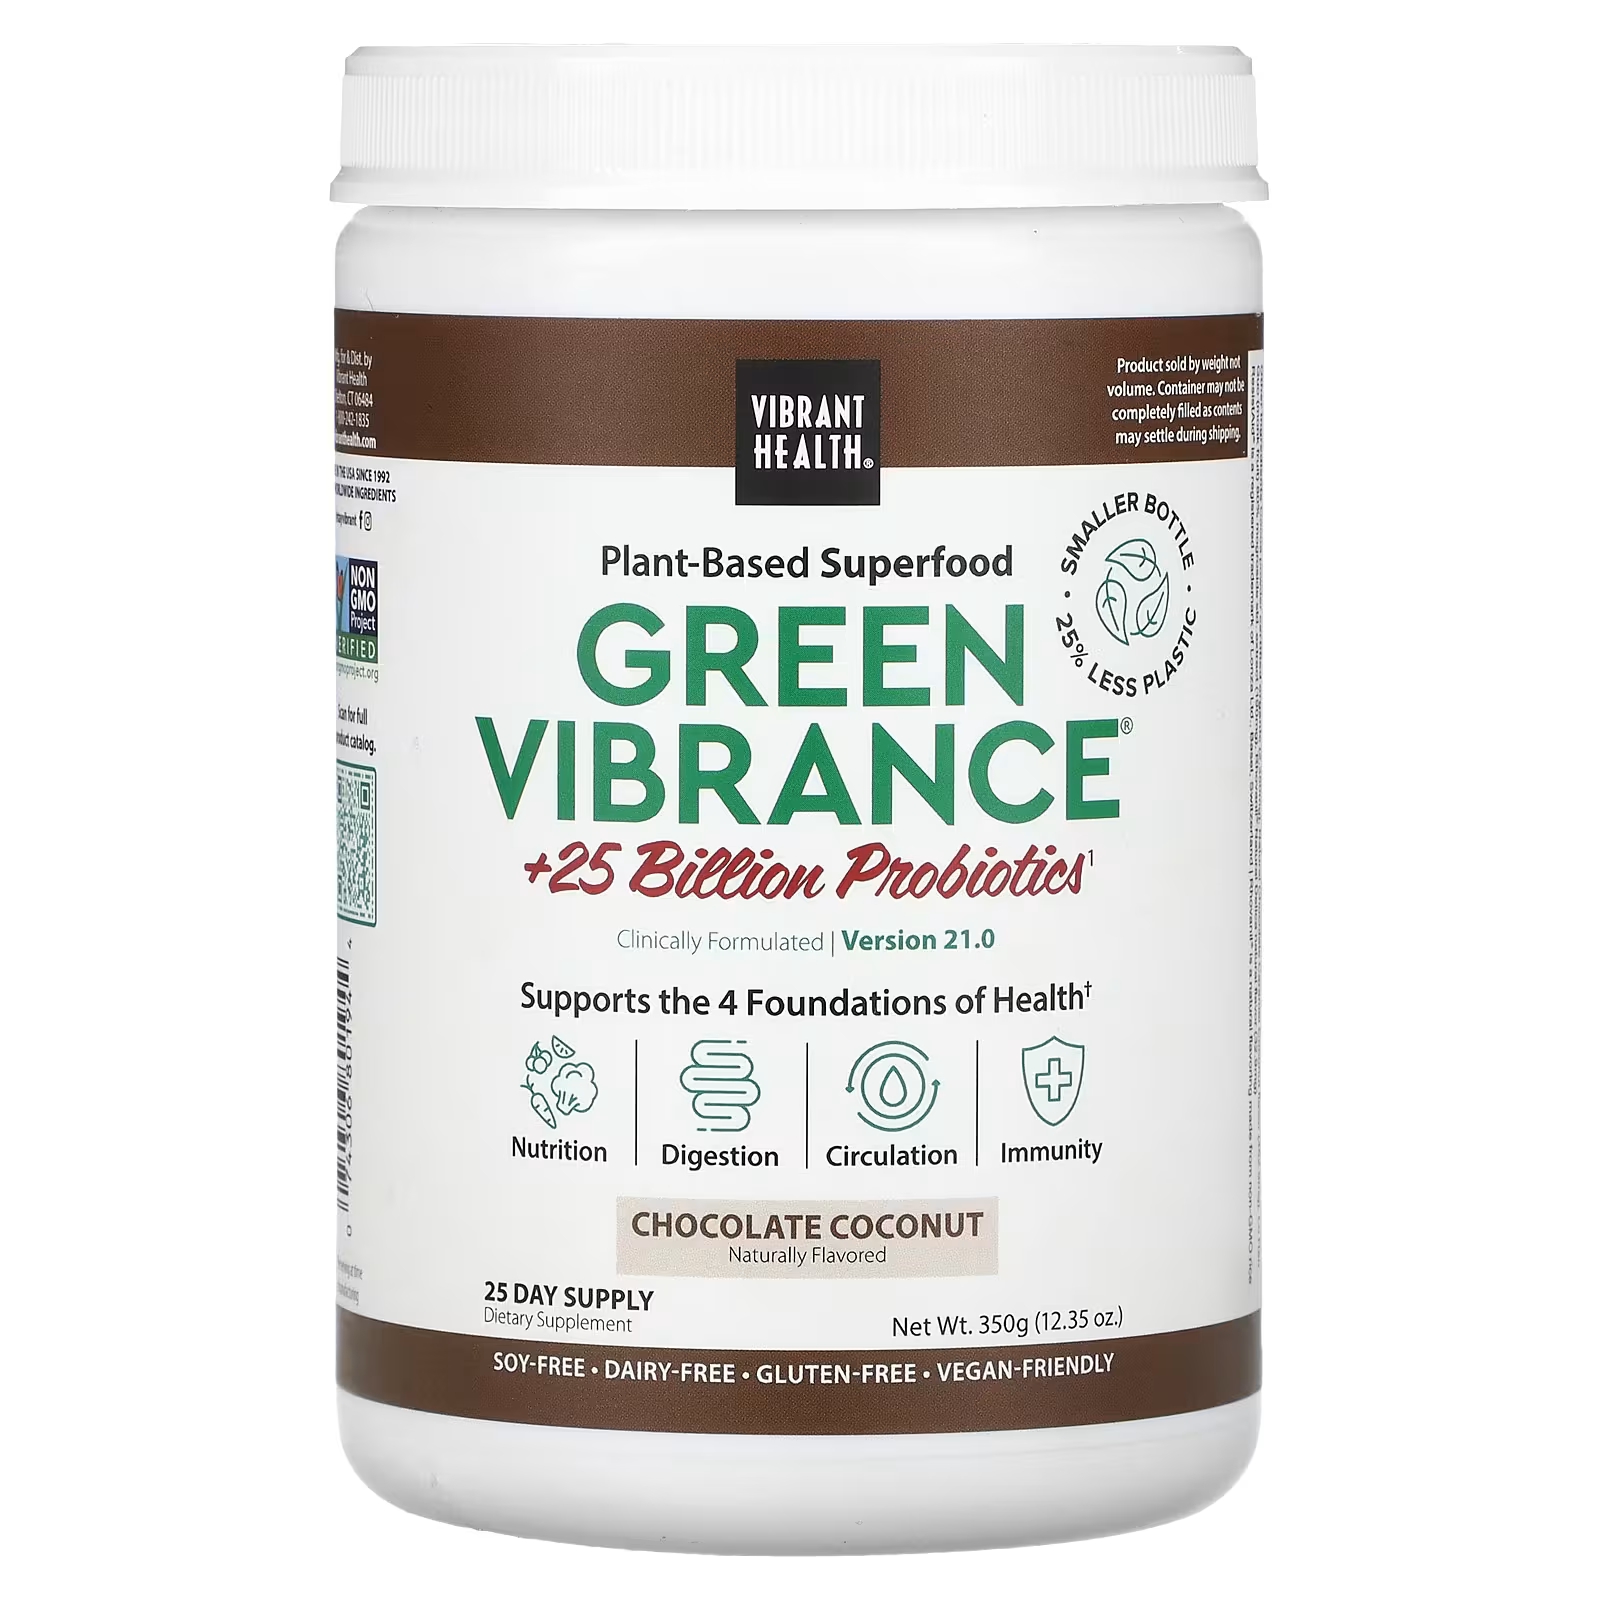 Vibrant Health Green Vibrance +25 миллиардов пробиотиков Версия 21.0 Шоколад Кокос 12,35 унции (350 г) vibrant health green vibrance 25 млрд пробиотиков версия 19 1 675 6 г 23 83 унции